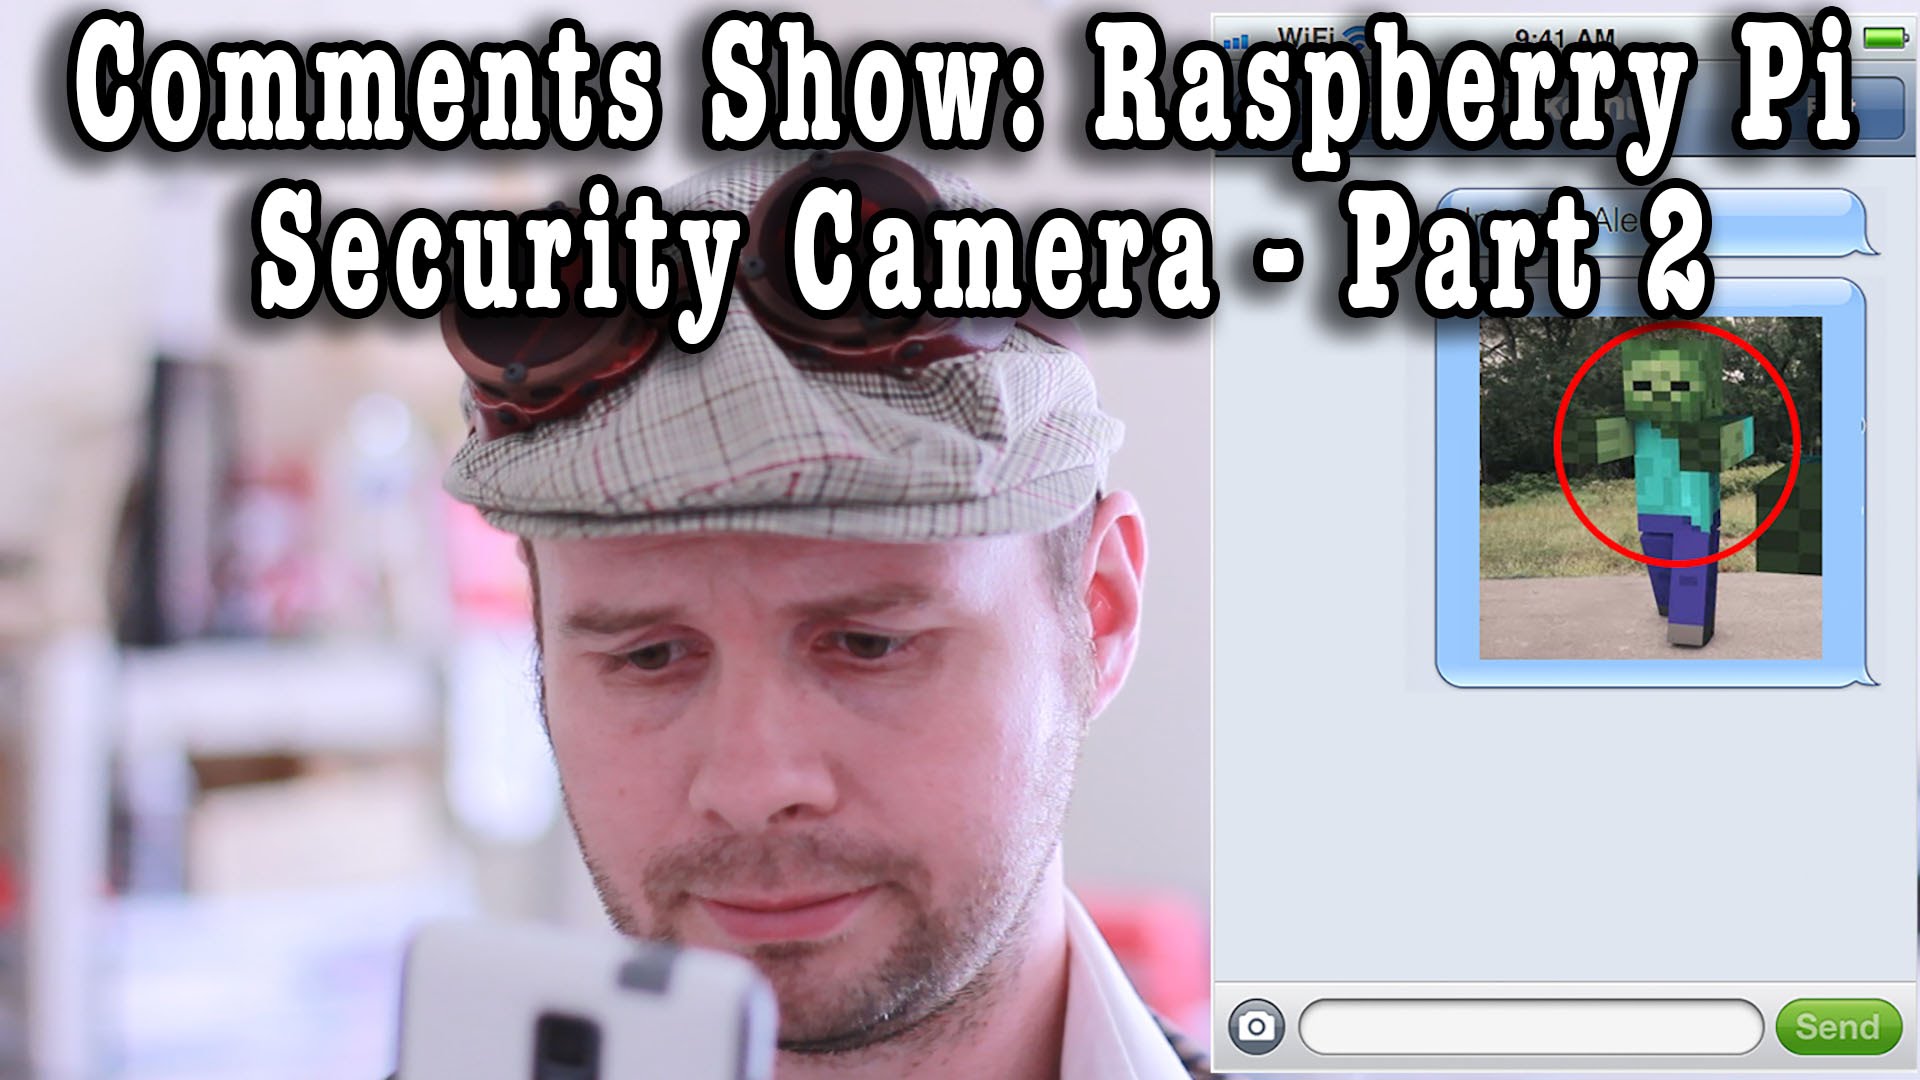 securityspy pyle camera